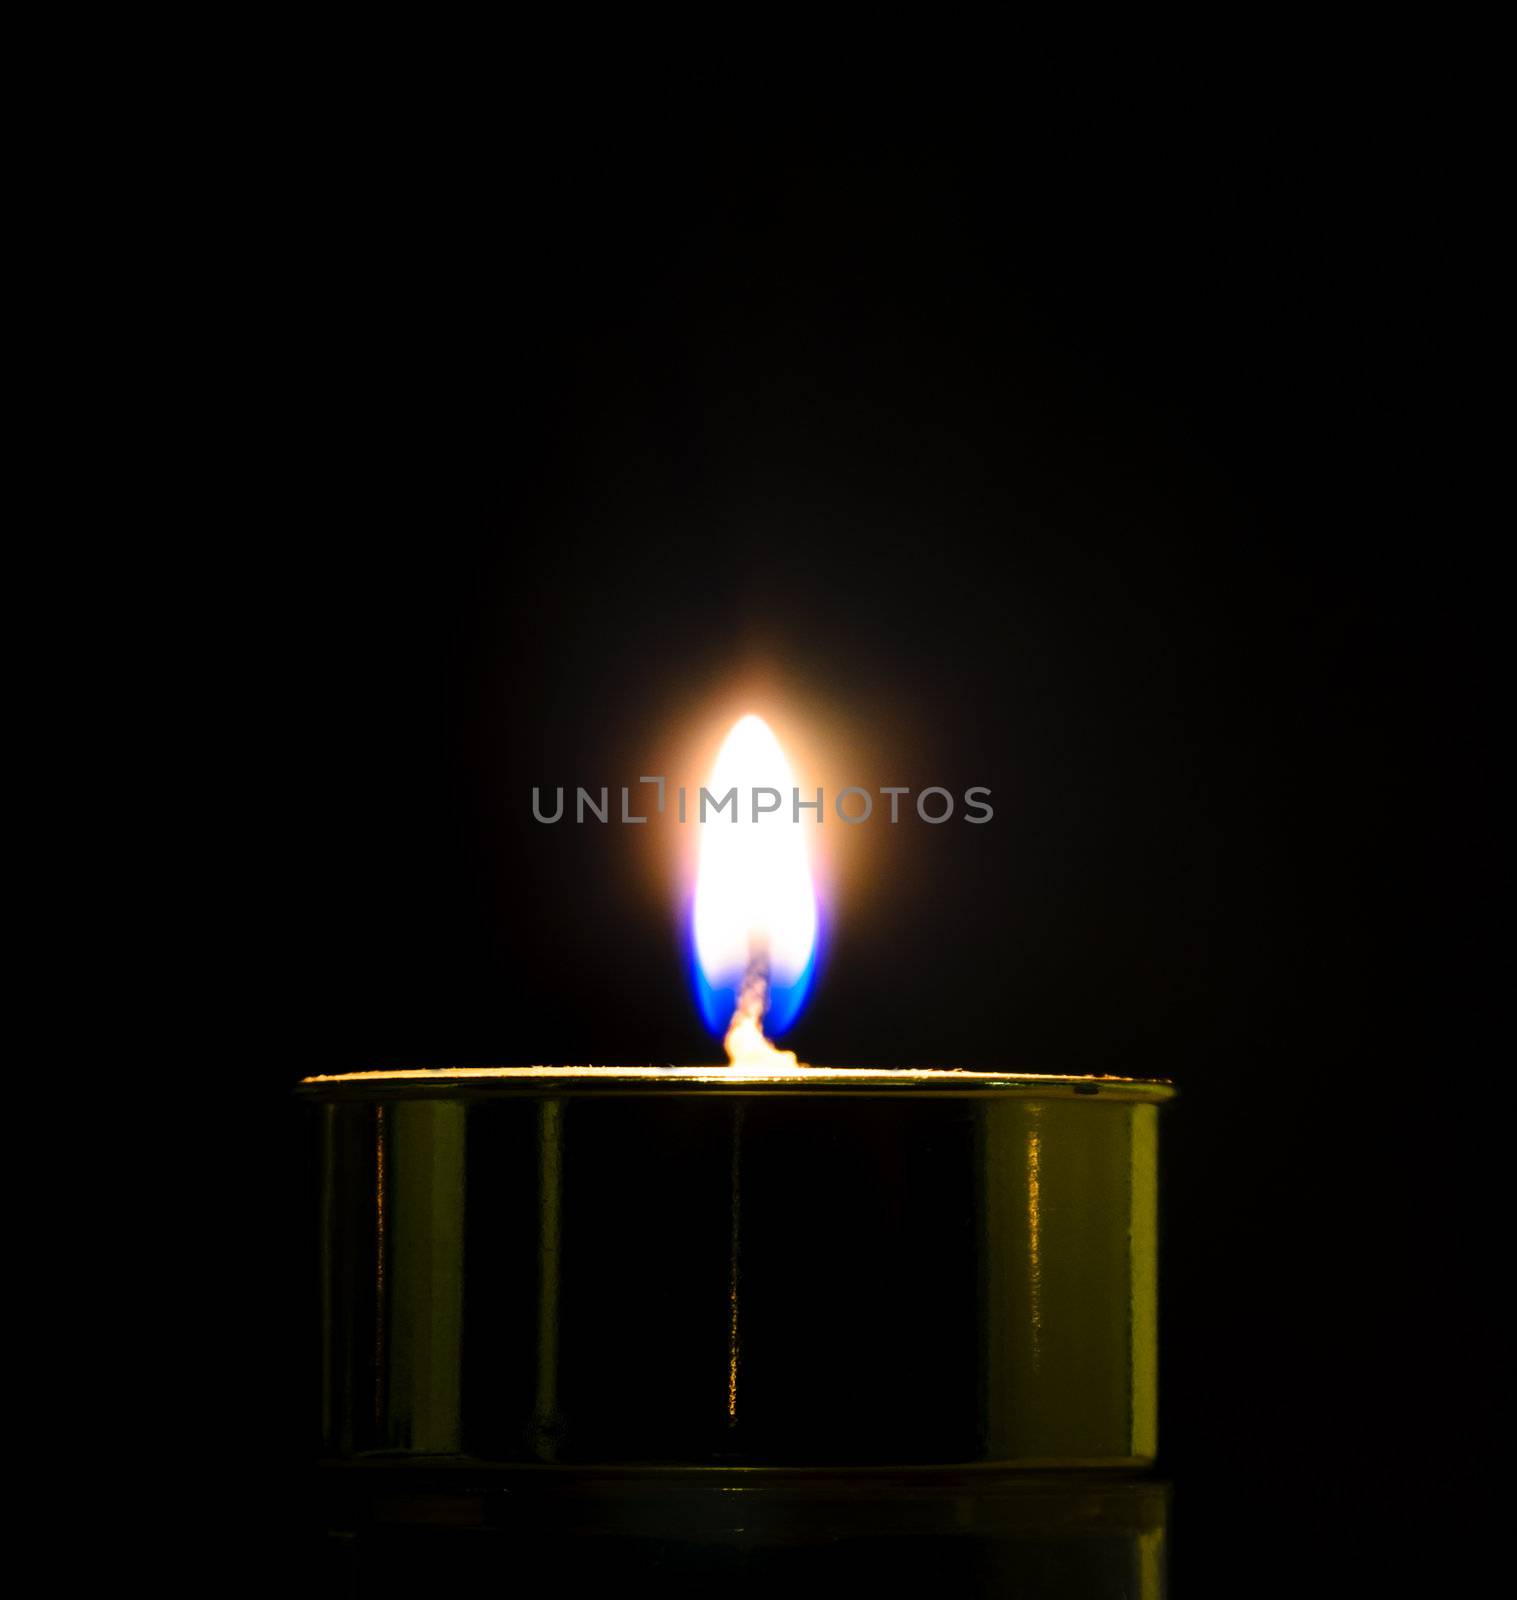 candle light on black background